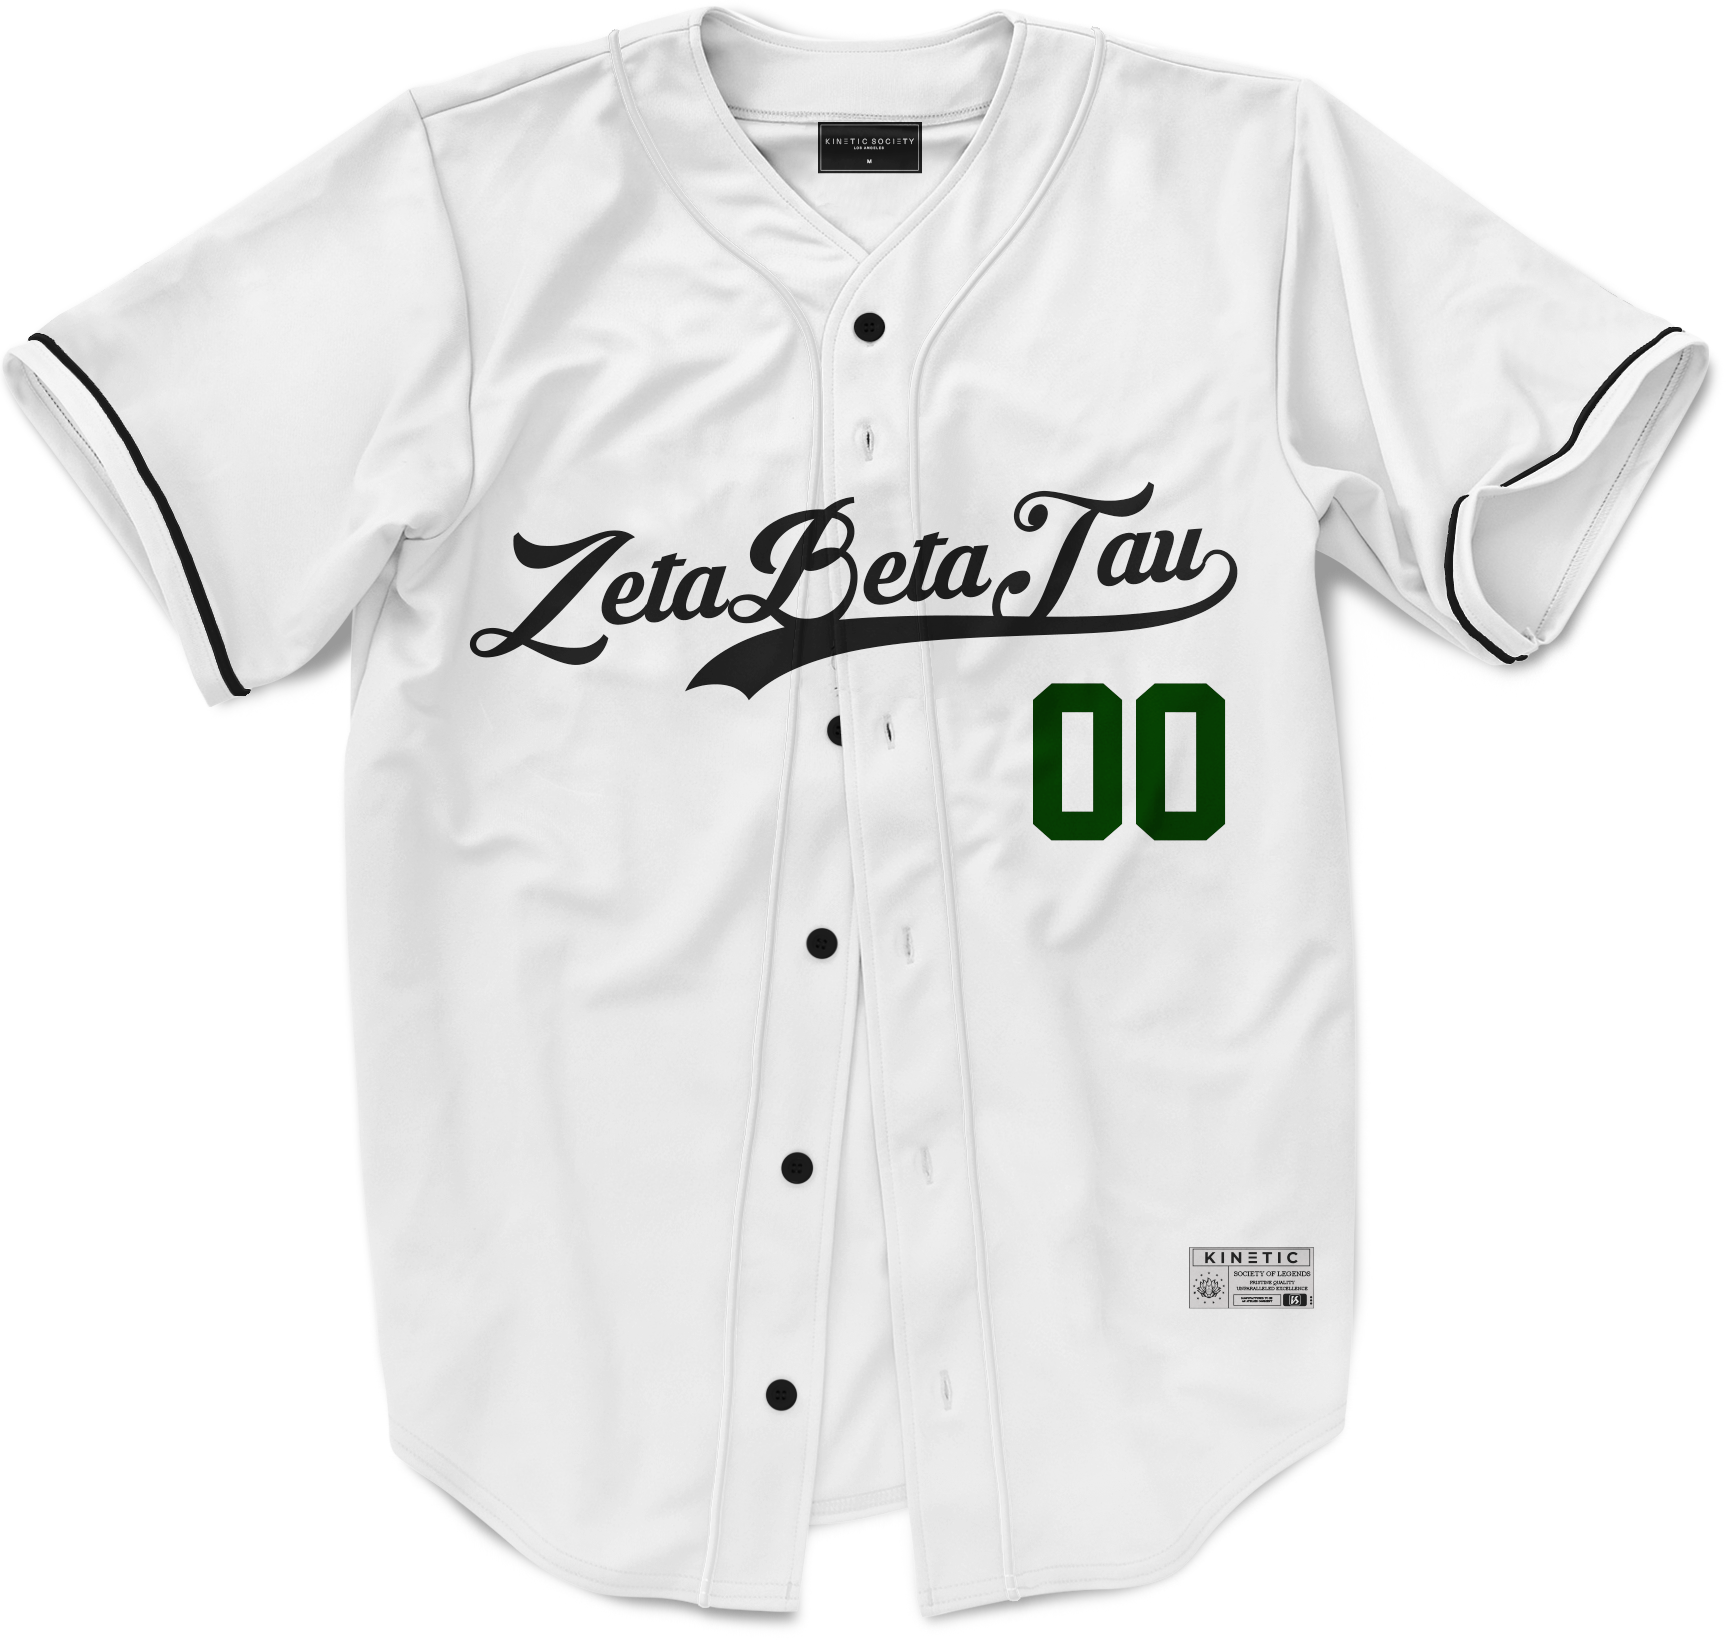 Zeta Beta Tau - Classic Ballpark Green Baseball Jersey